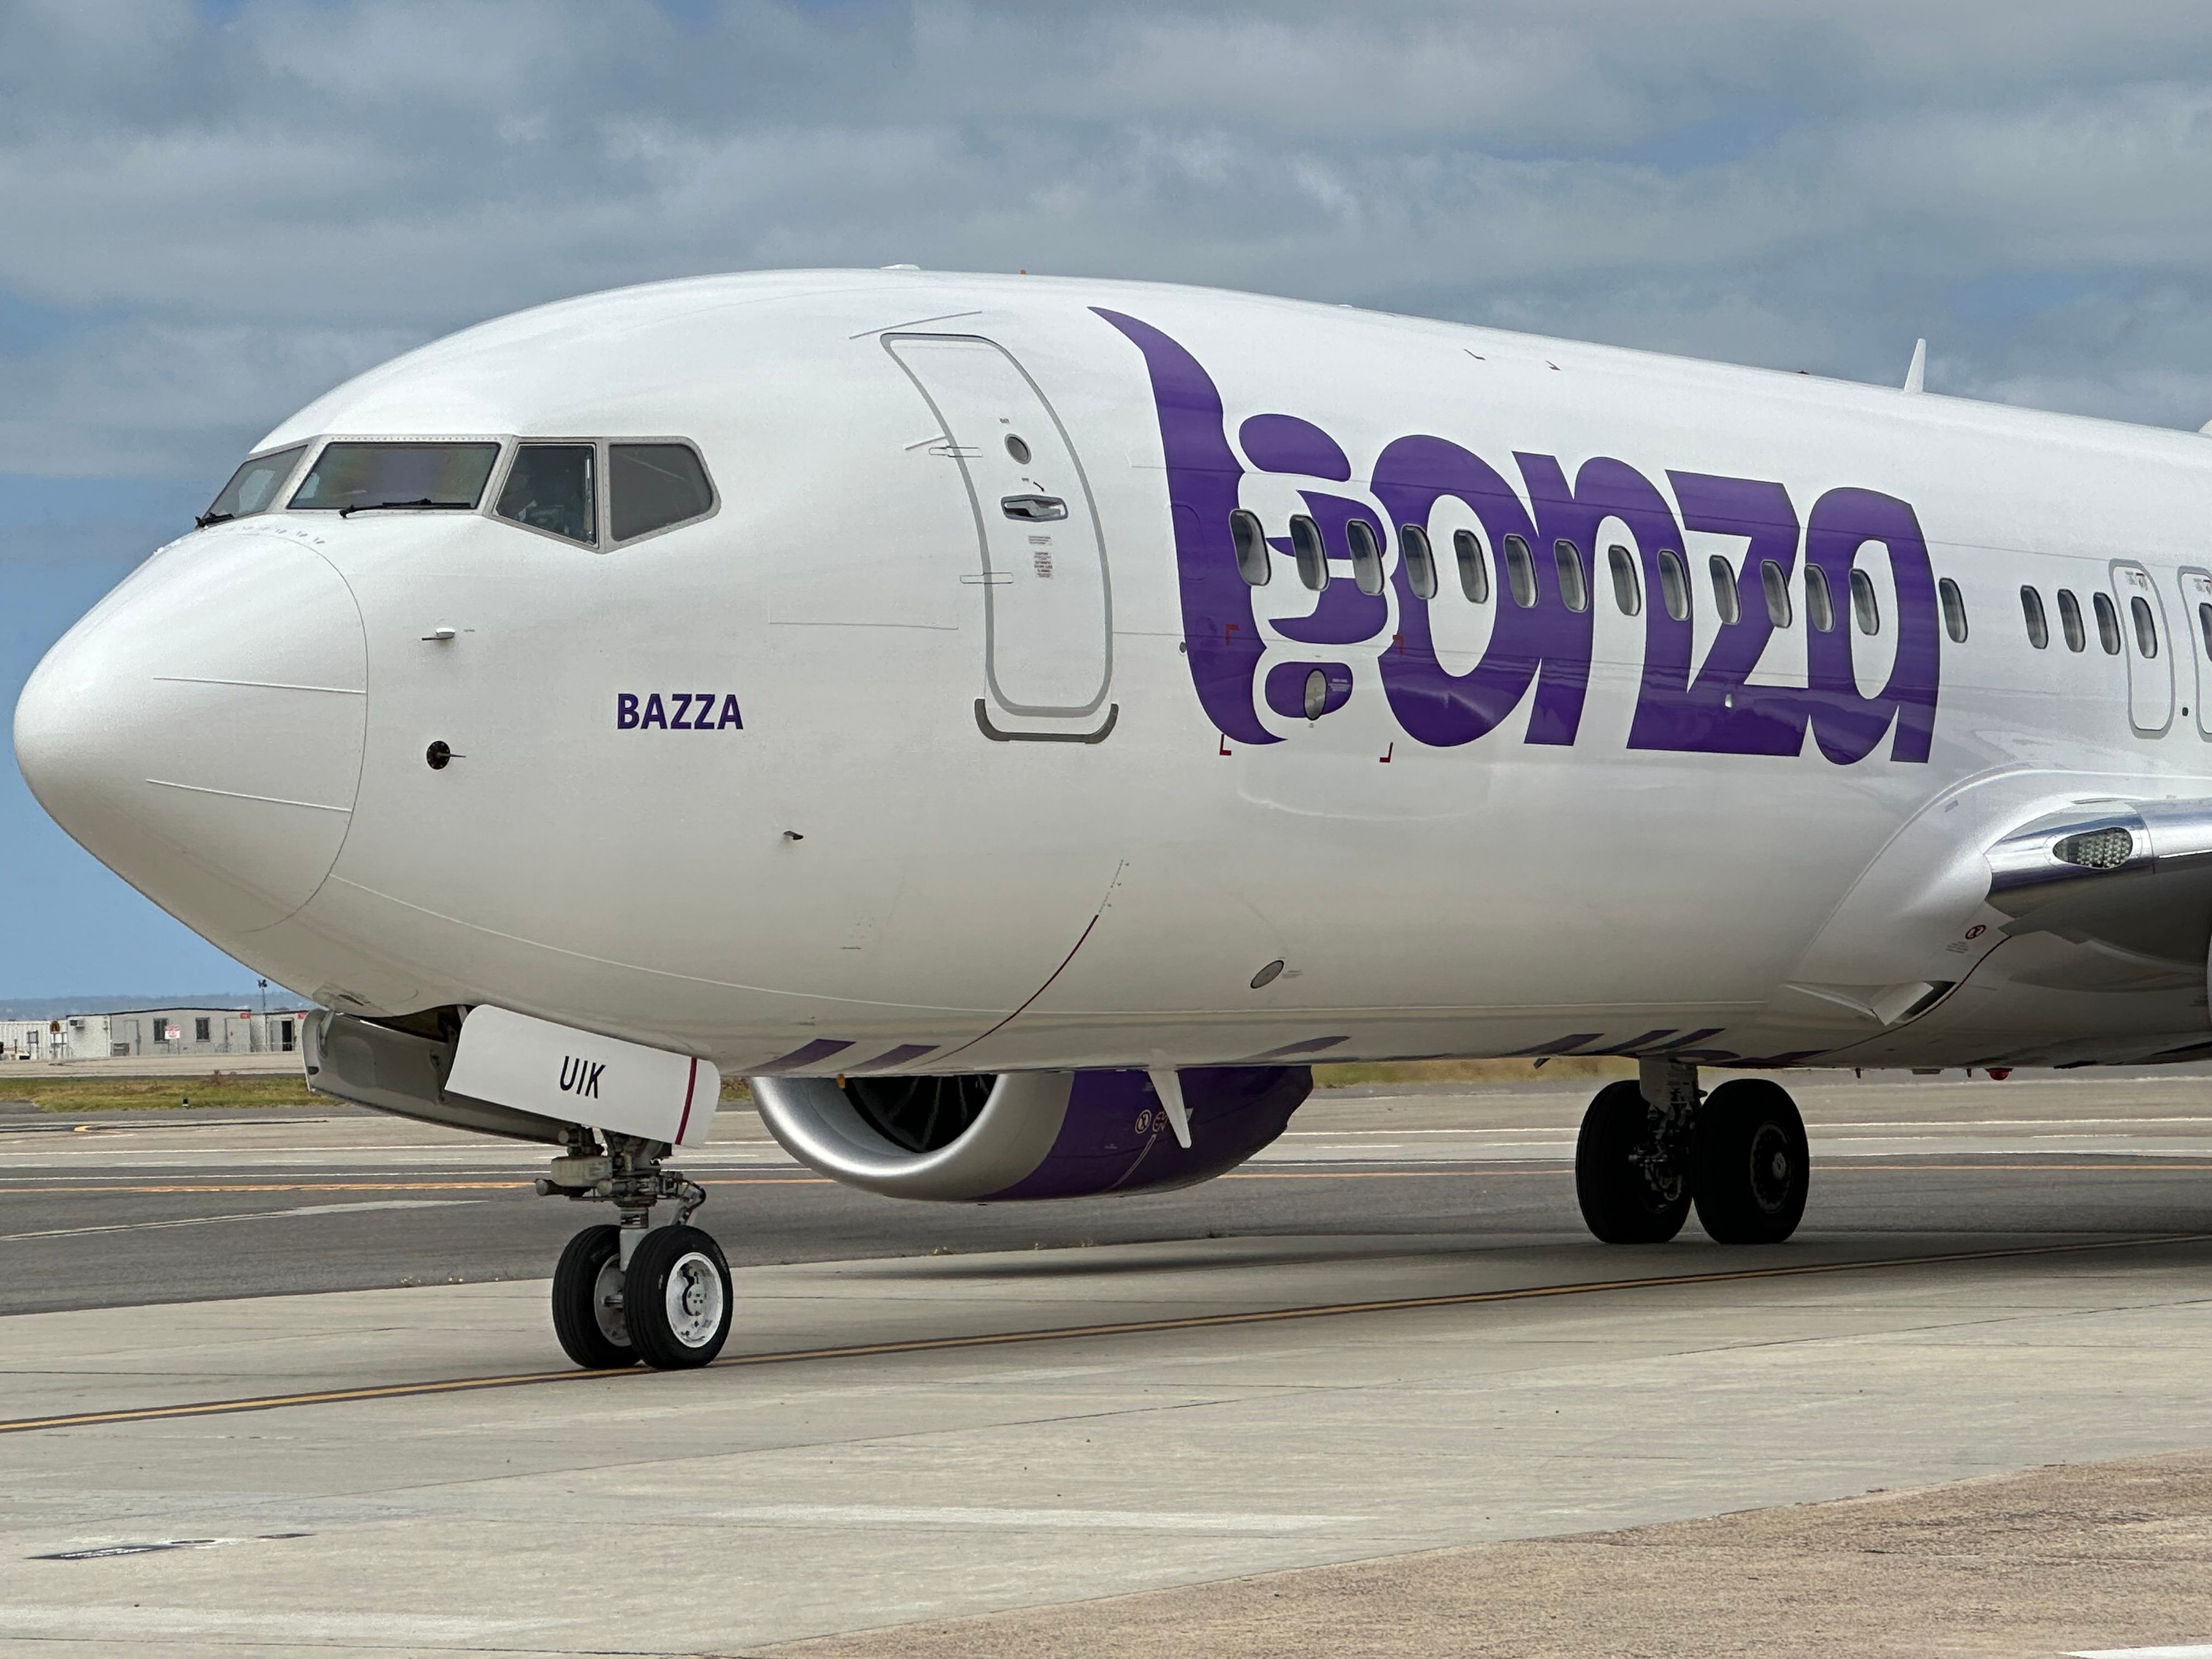 Bonza 737 MAX 8 Bazza at Avalon Airport